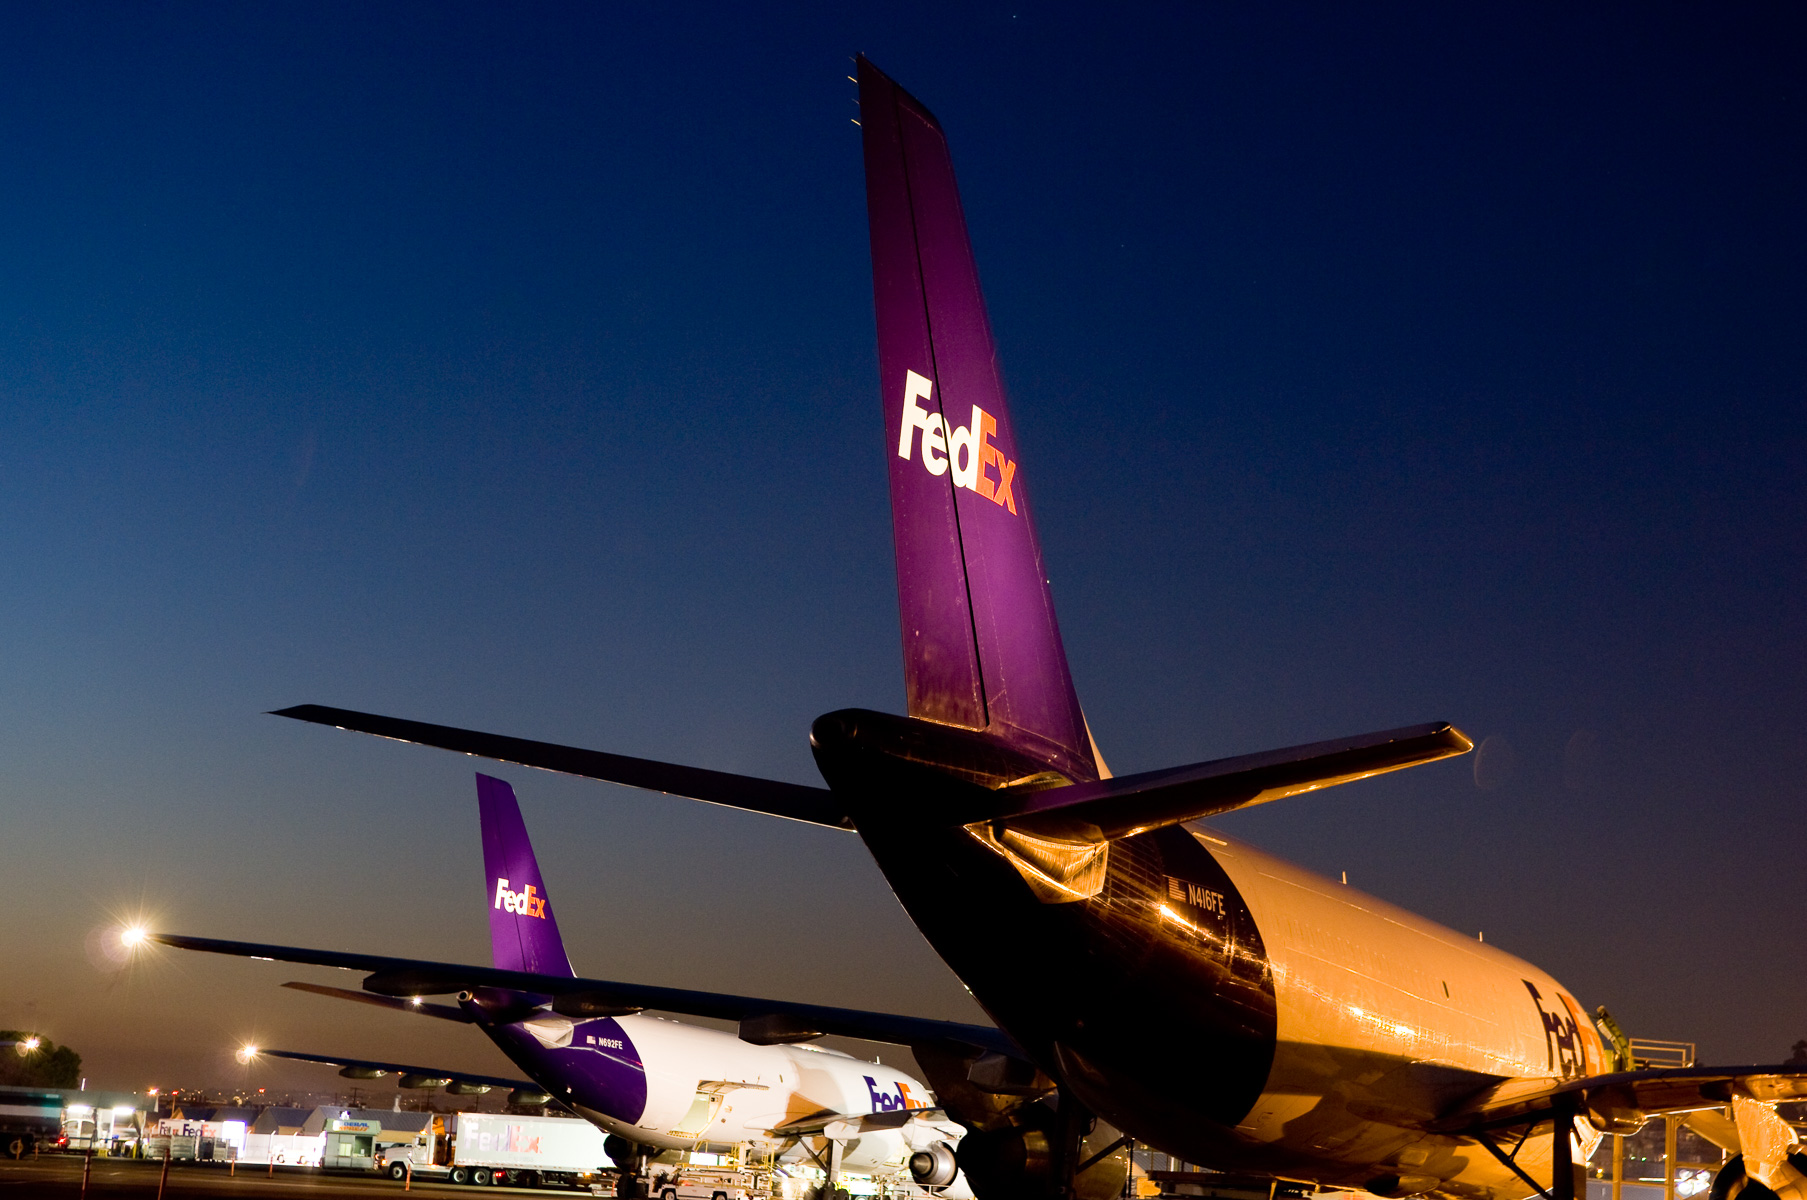 FedEx planes at night